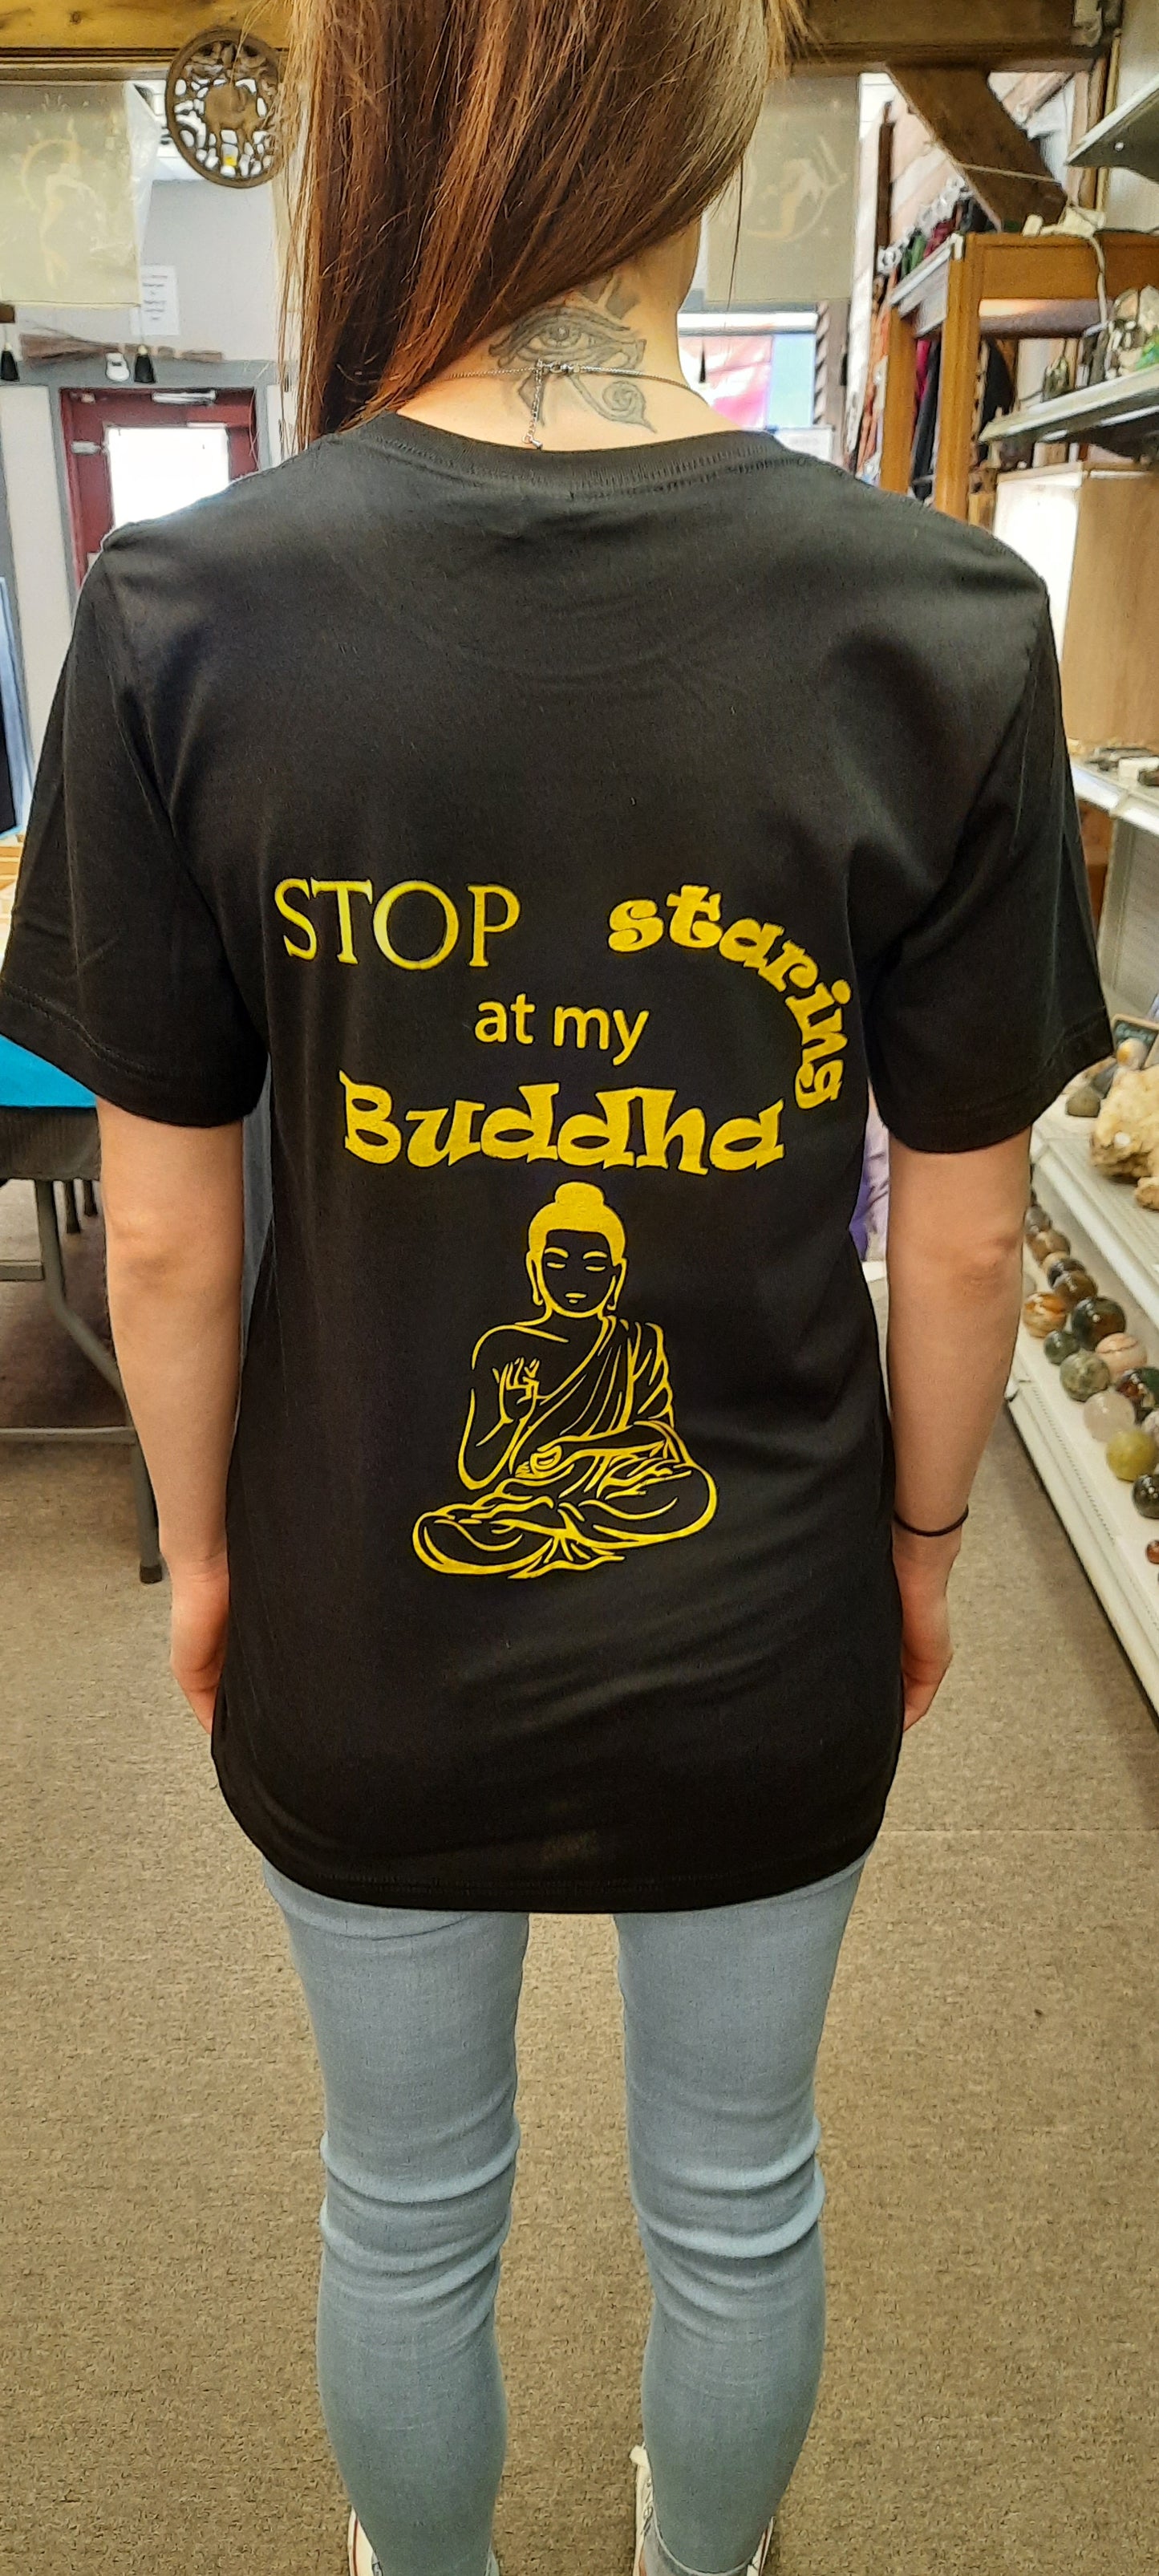 T-Shirts, short sleeve, size small. "Stop staring at my Buddha."